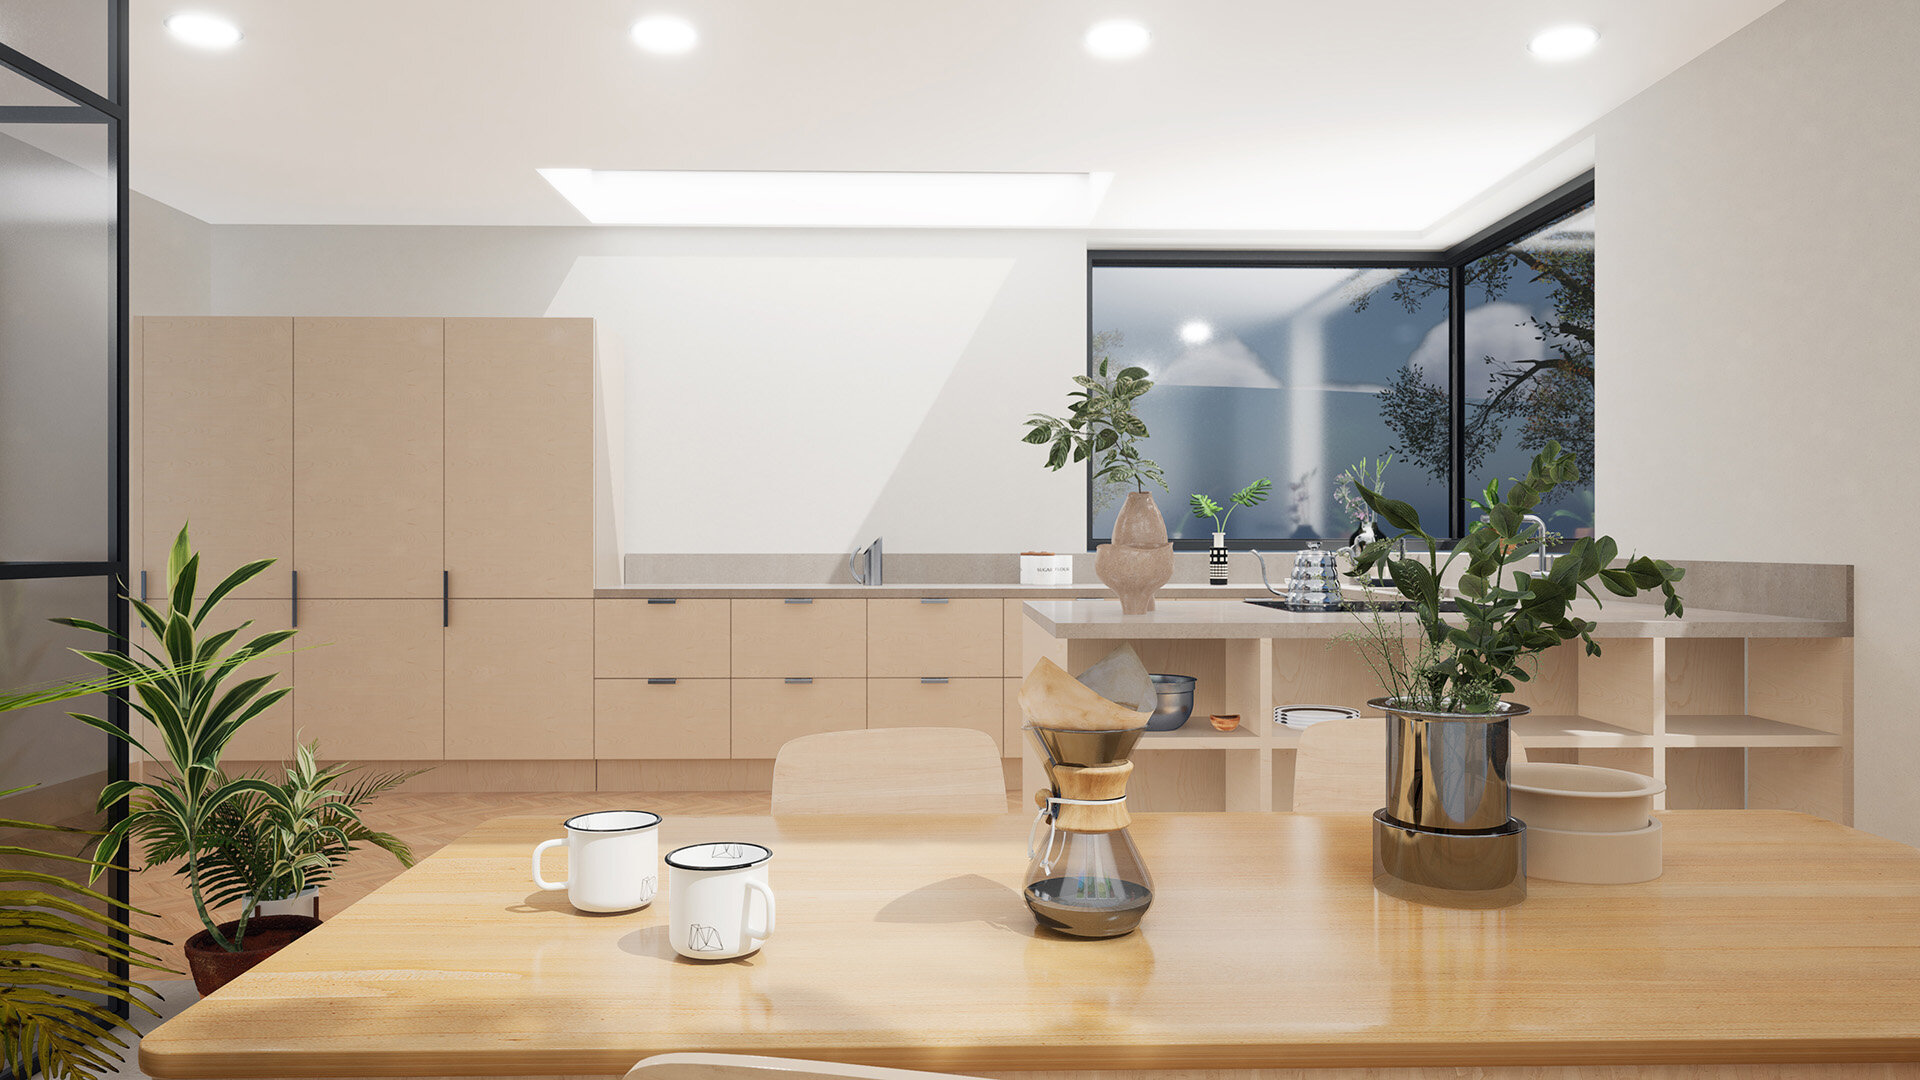 Kitchen Interior 02_Dusk-Dawn House_Sustainable Yorkshire Architects_Samuel Kendall Associates.jpg